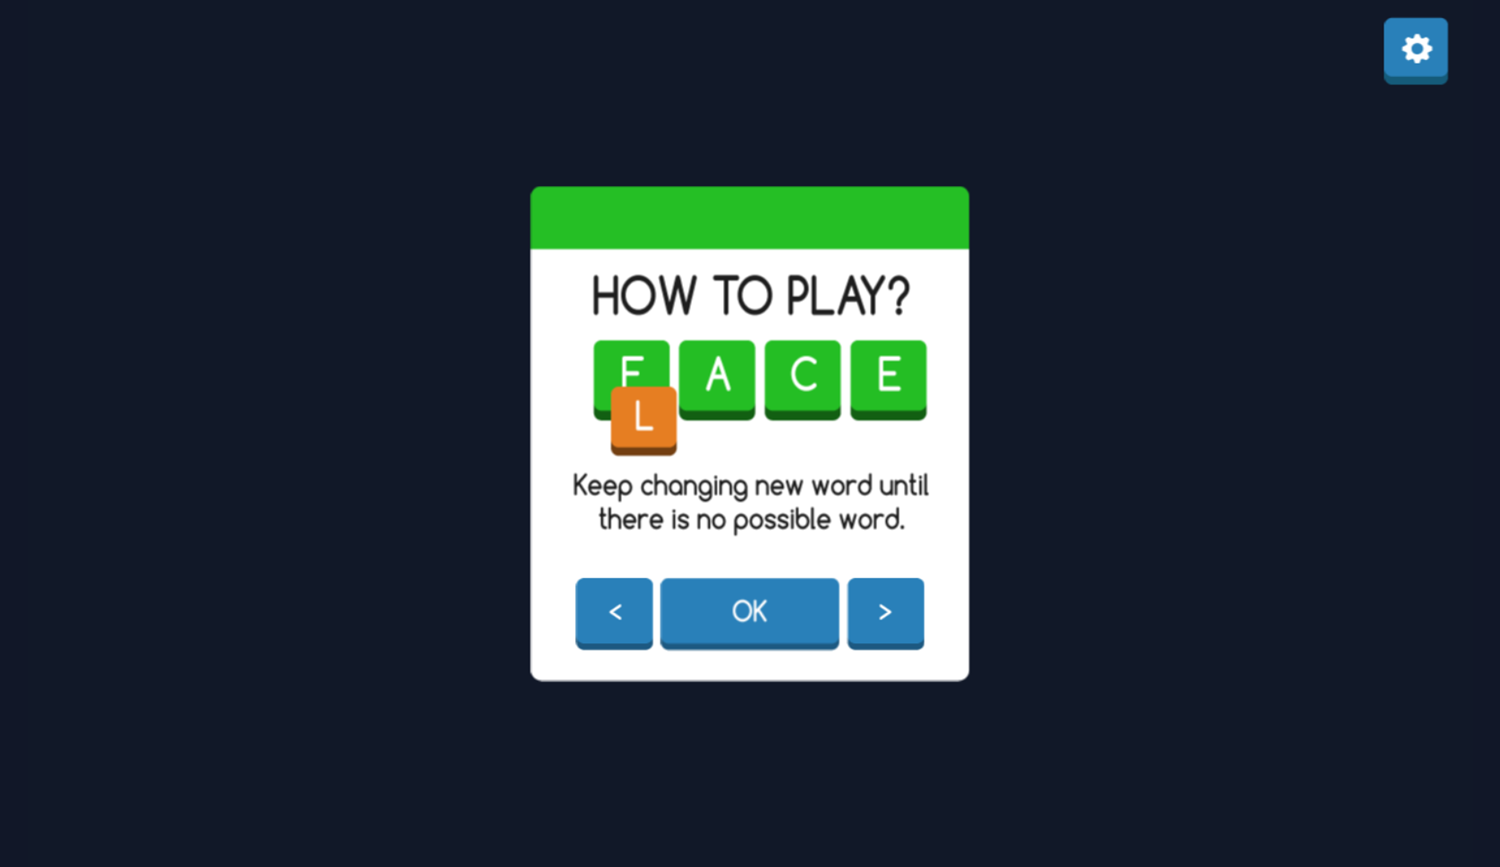 Change Word Game Instructions Screenshot.